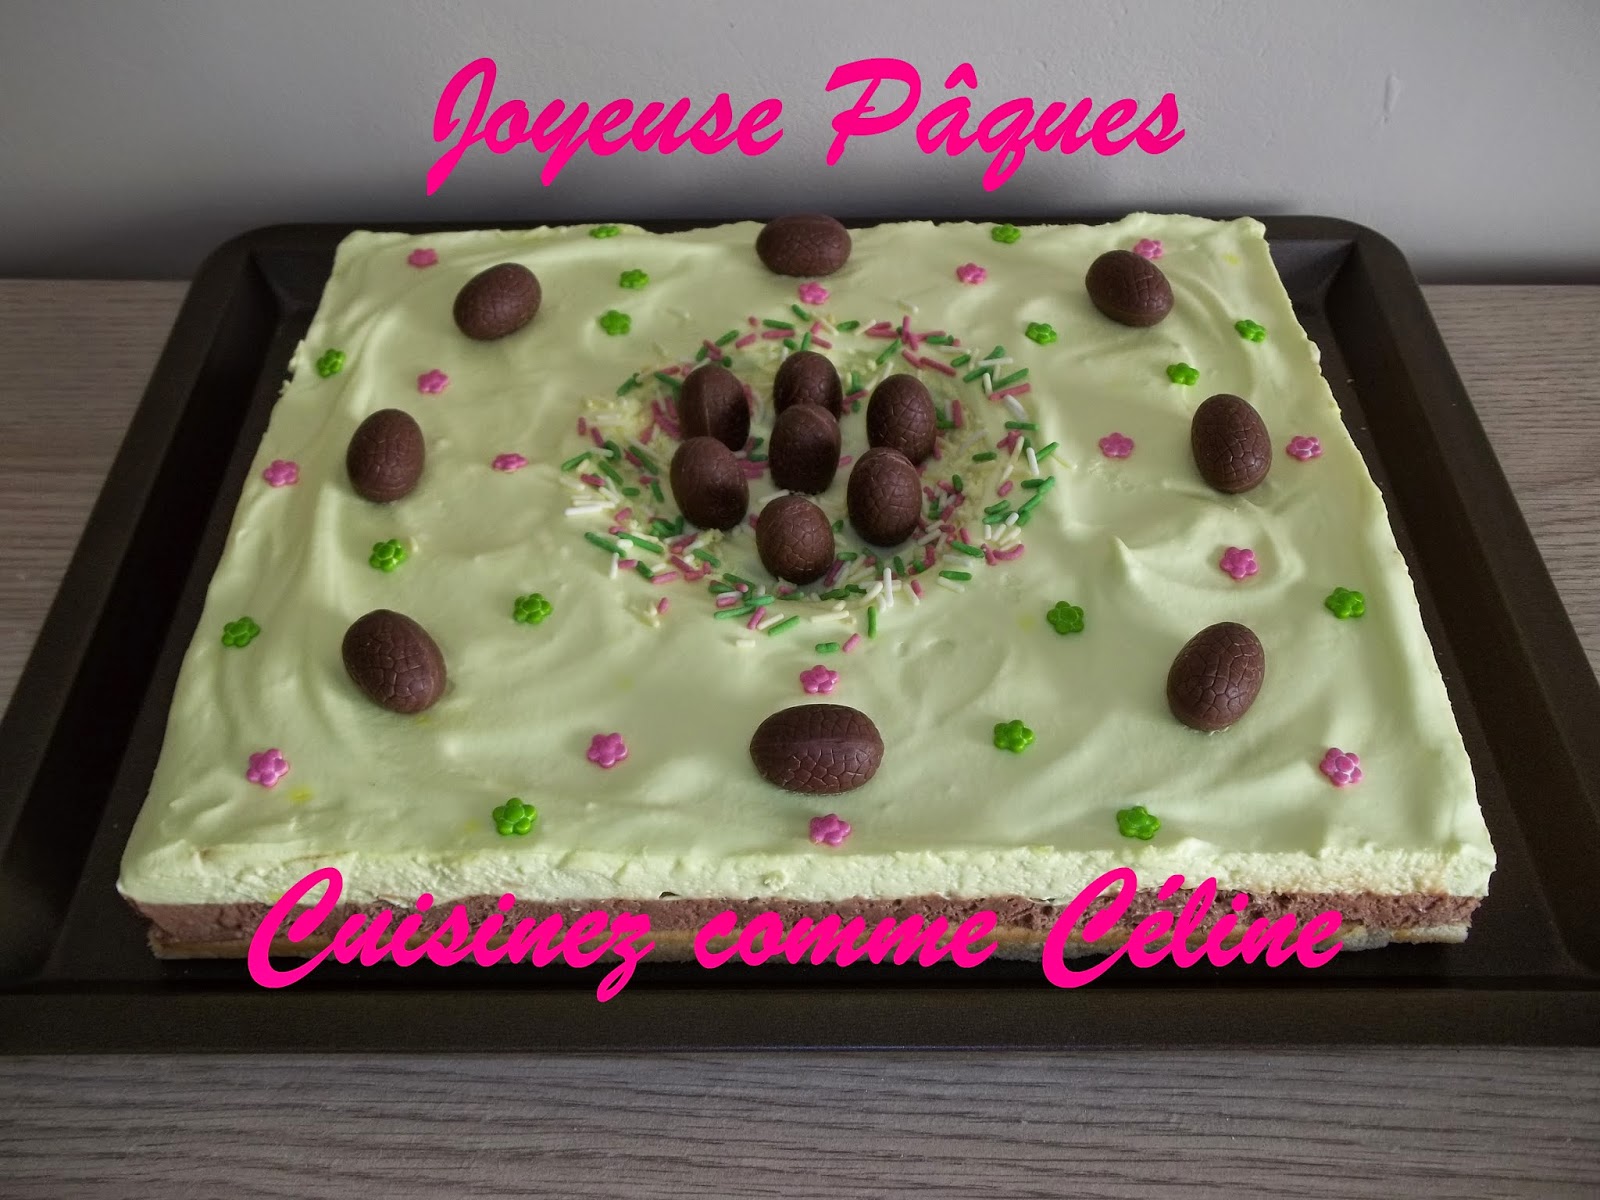 http://cuisinezcommeceline.blogspot.fr/2015/04/bavarois-paques-chocolat-blanc-chocolat.html